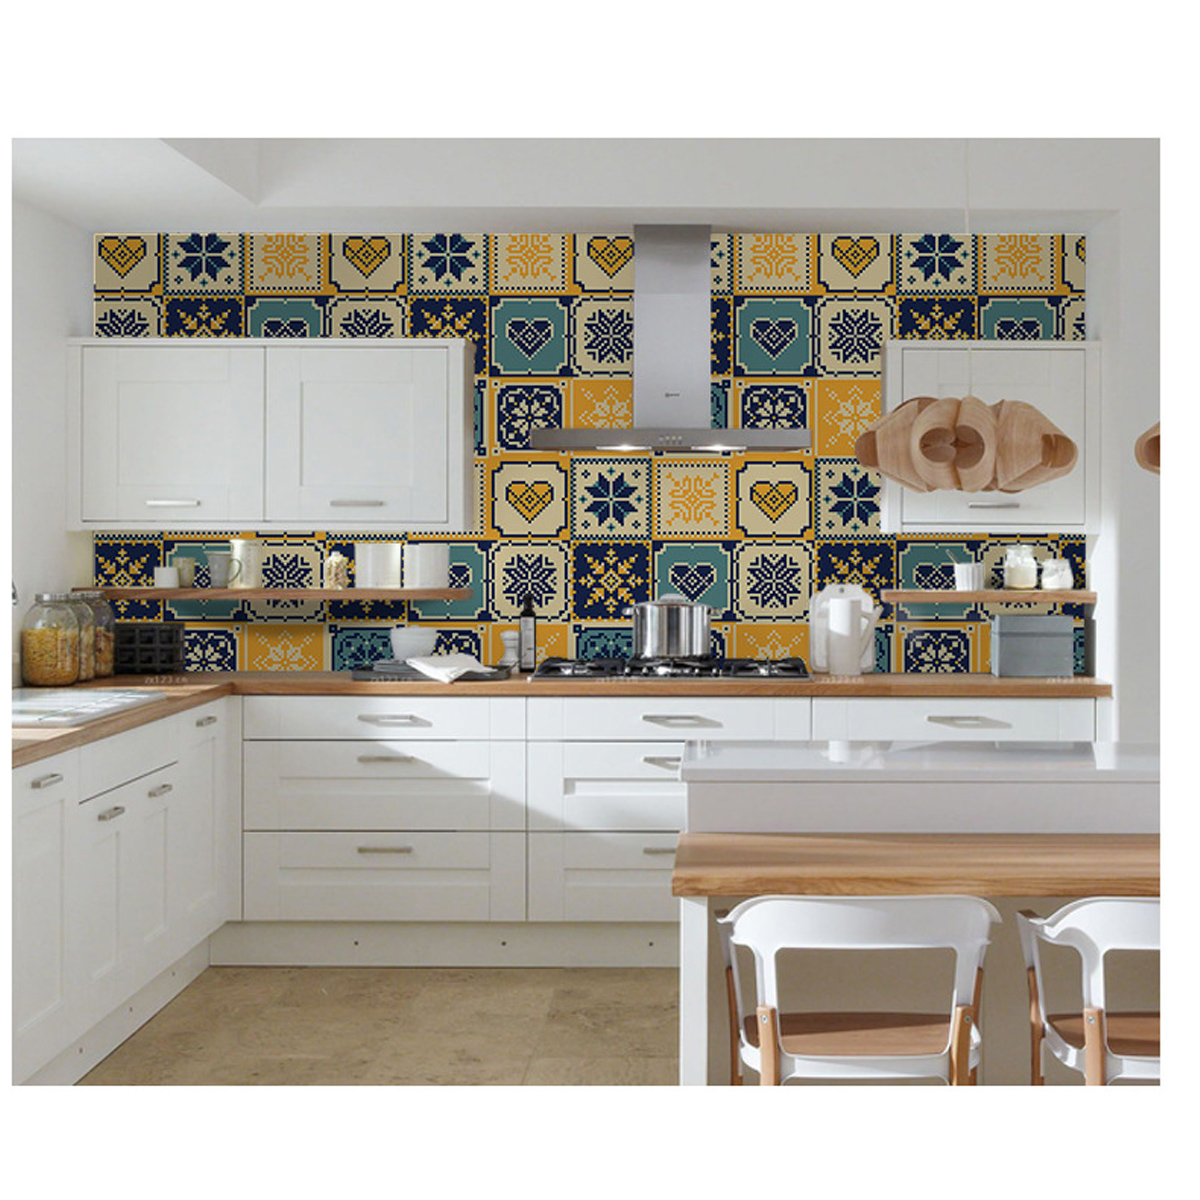 10PCS-Ceramic-Self-Adhesive-Wall-Sticker-Wallpaper-DIY-Kitchen-Bathroom-PVC-Decal-1823174-2